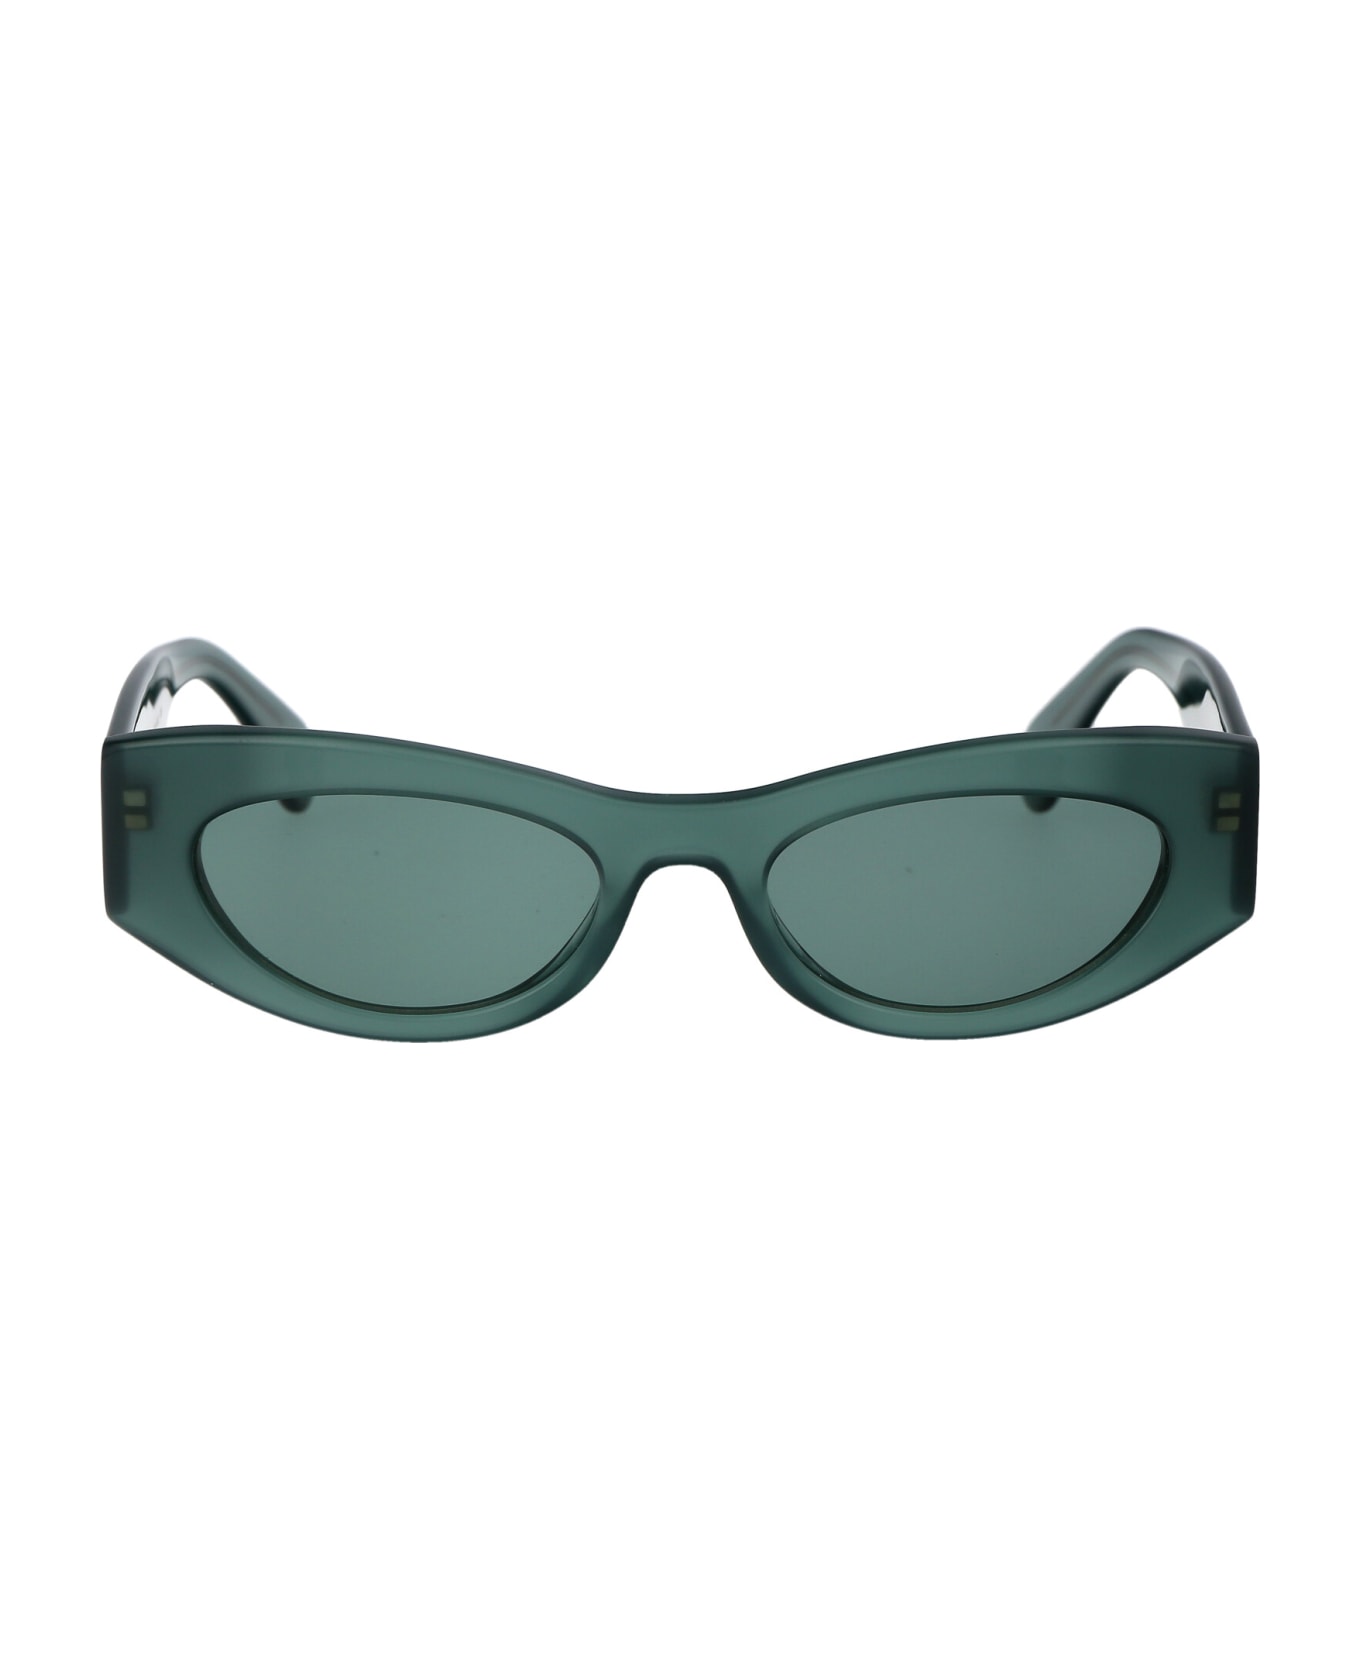 Lanvin Lnv669s Sunglasses - 330 GREEN サングラス